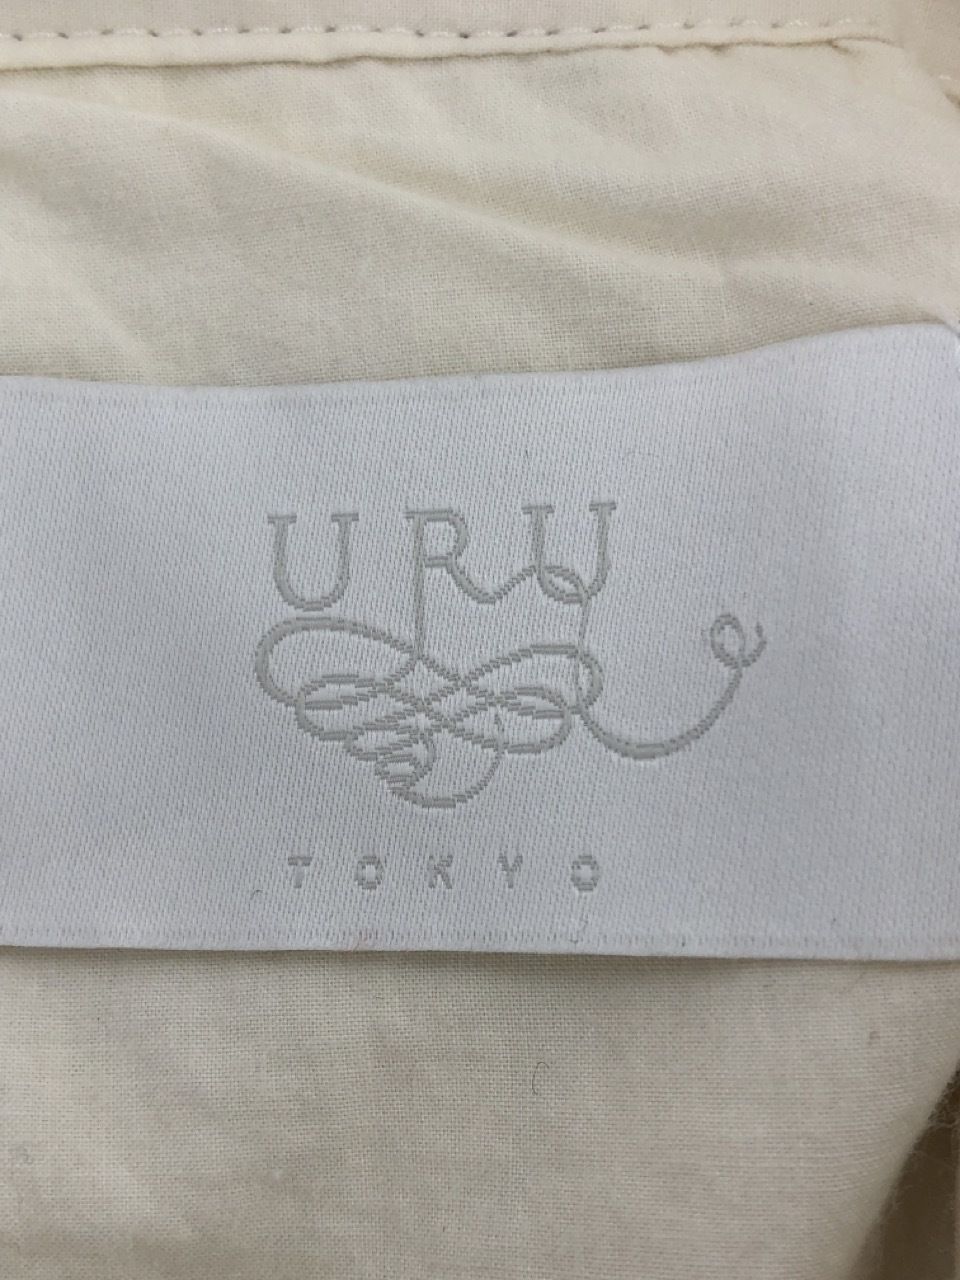 URU TOKYO ウルトーキョー コットンヘビードリル 1タックパンツ